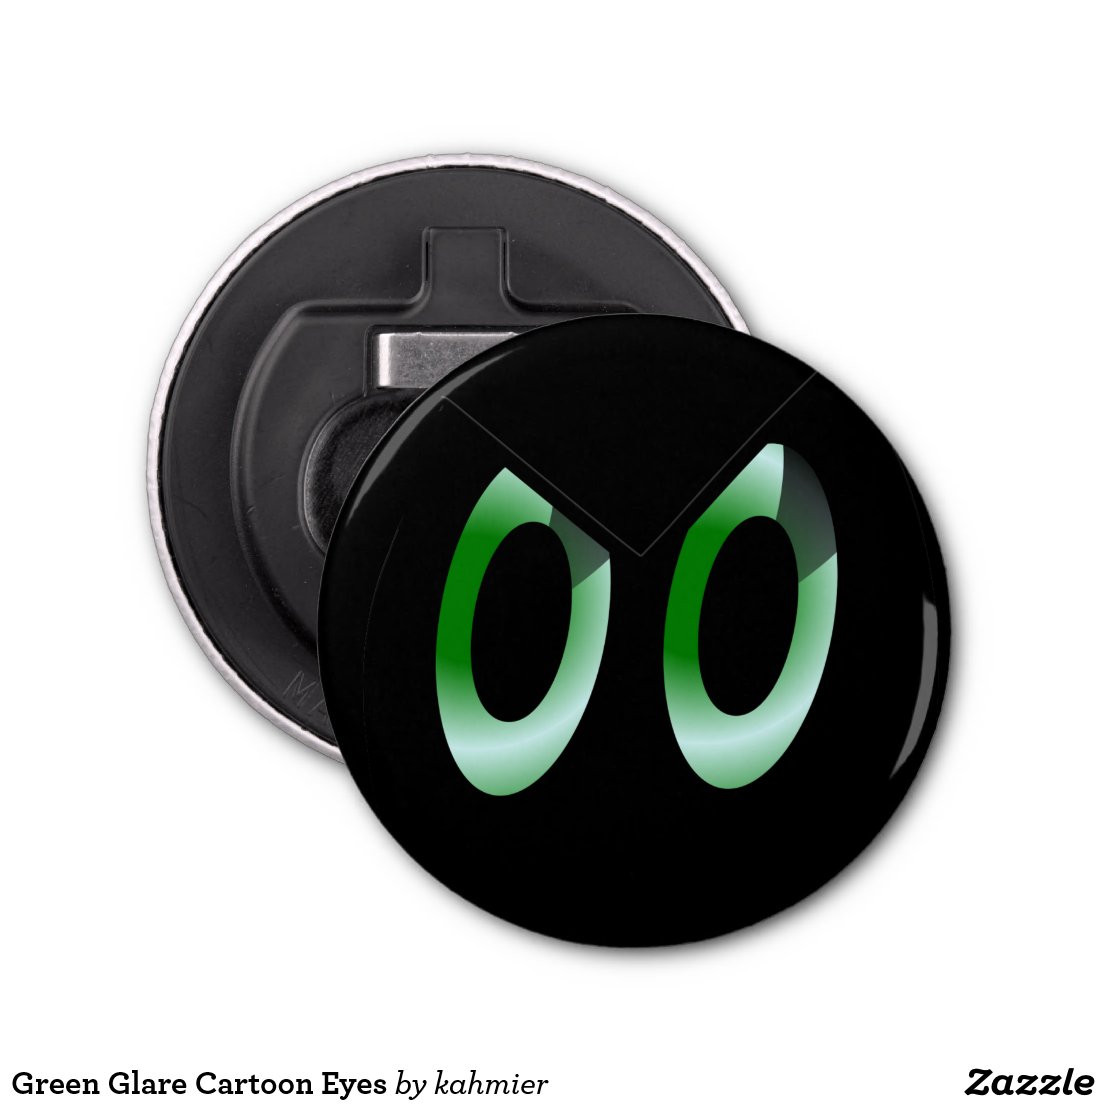 Green Glare Cartoon Eyes Bottle Opener